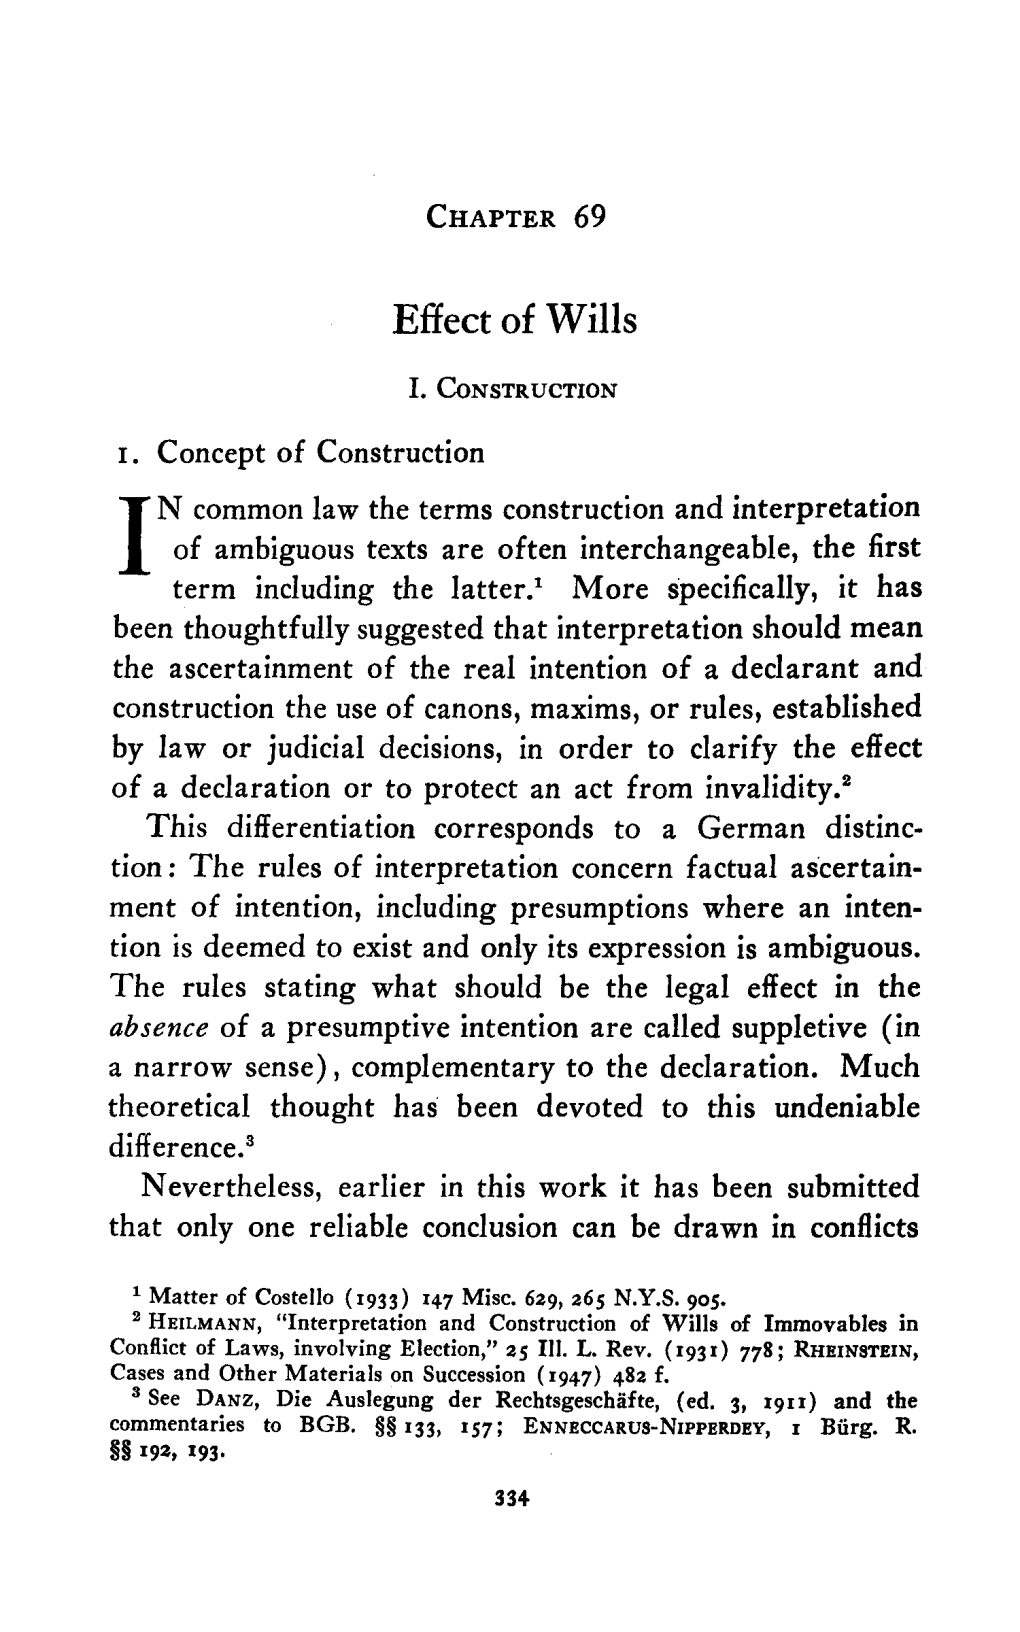 Effect of Wills